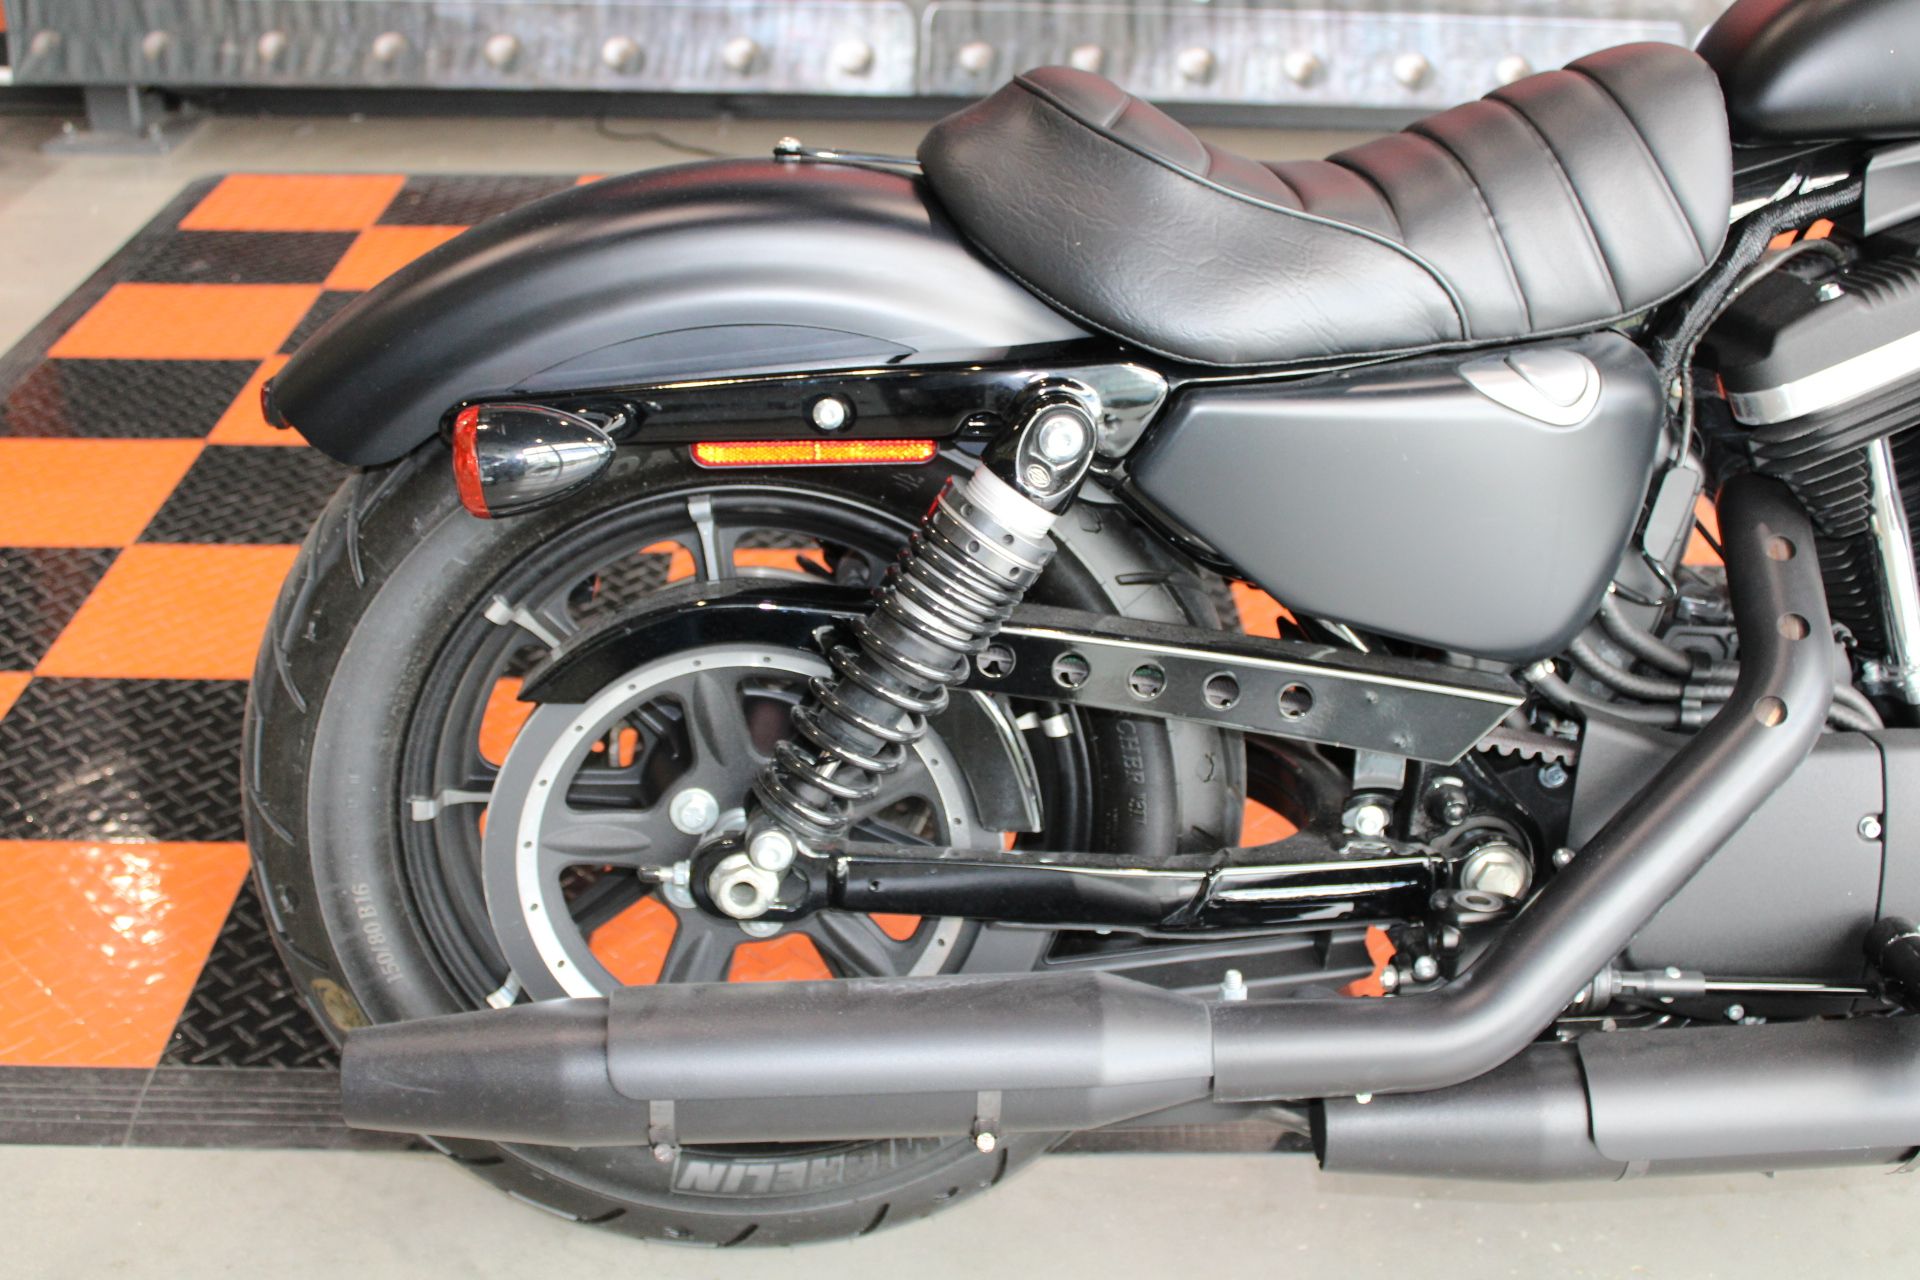 2021 Harley-Davidson Iron 883™ in Shorewood, Illinois - Photo 12